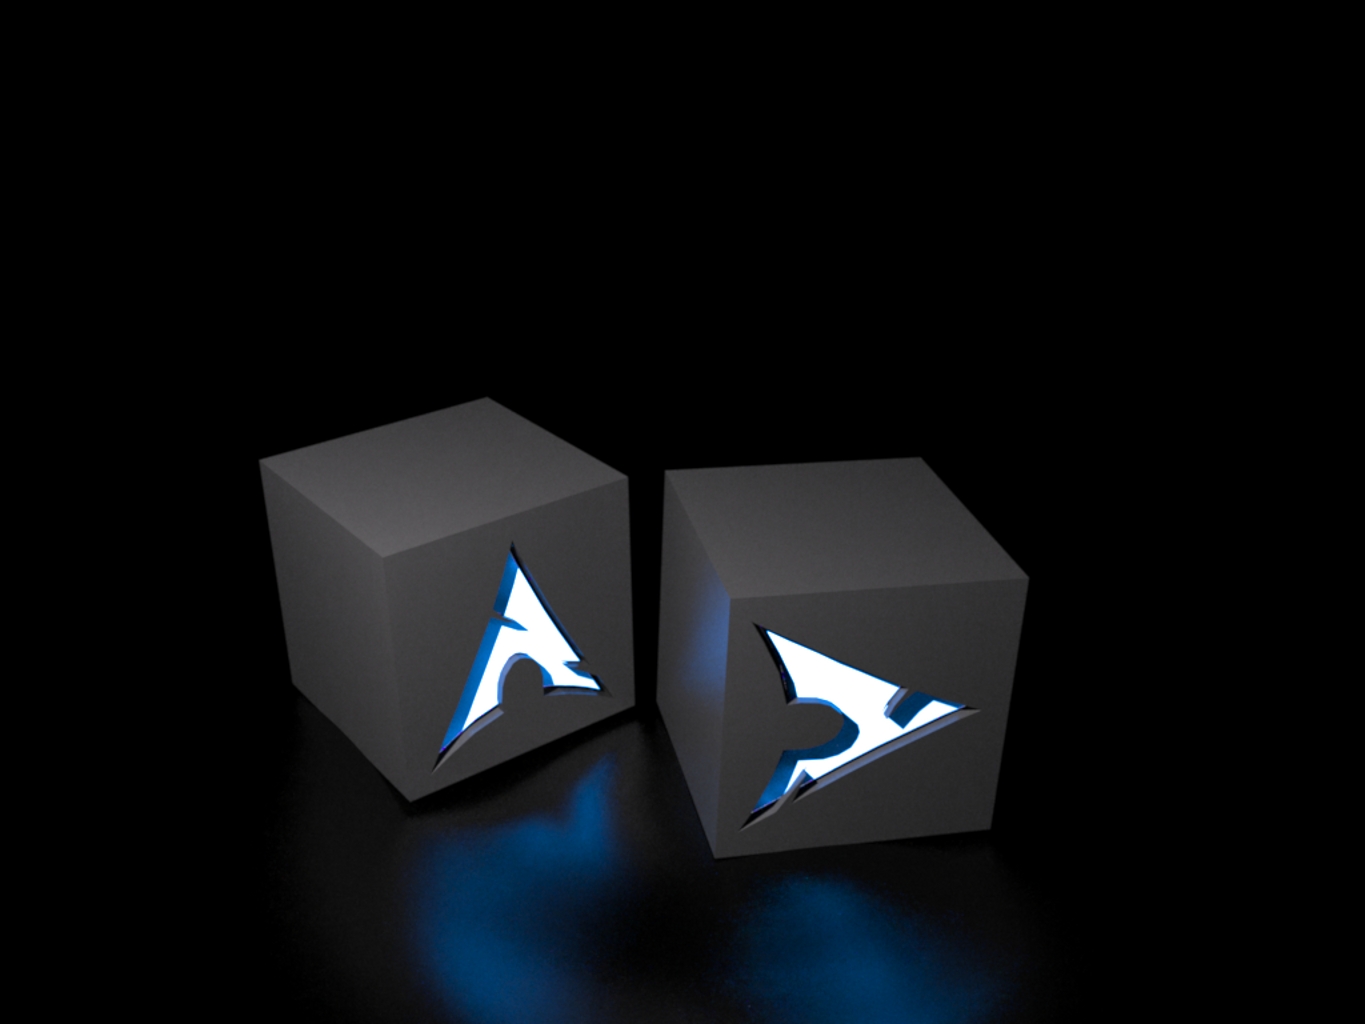 Dark blue cube design representing Arch Linux wallpaper